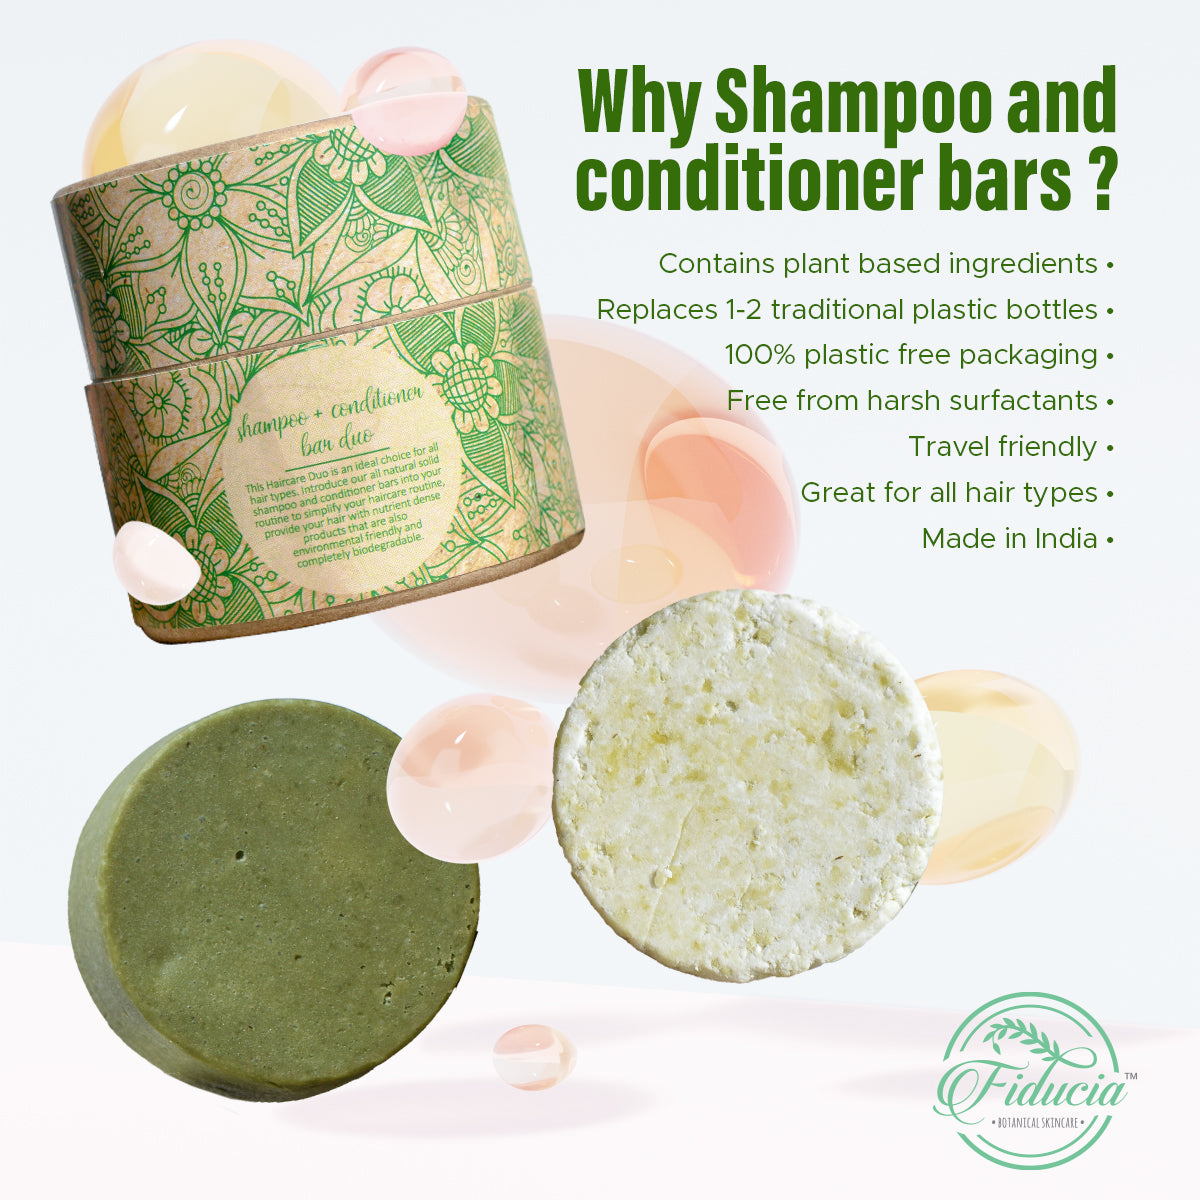 Shampoo + Conditioner Duo